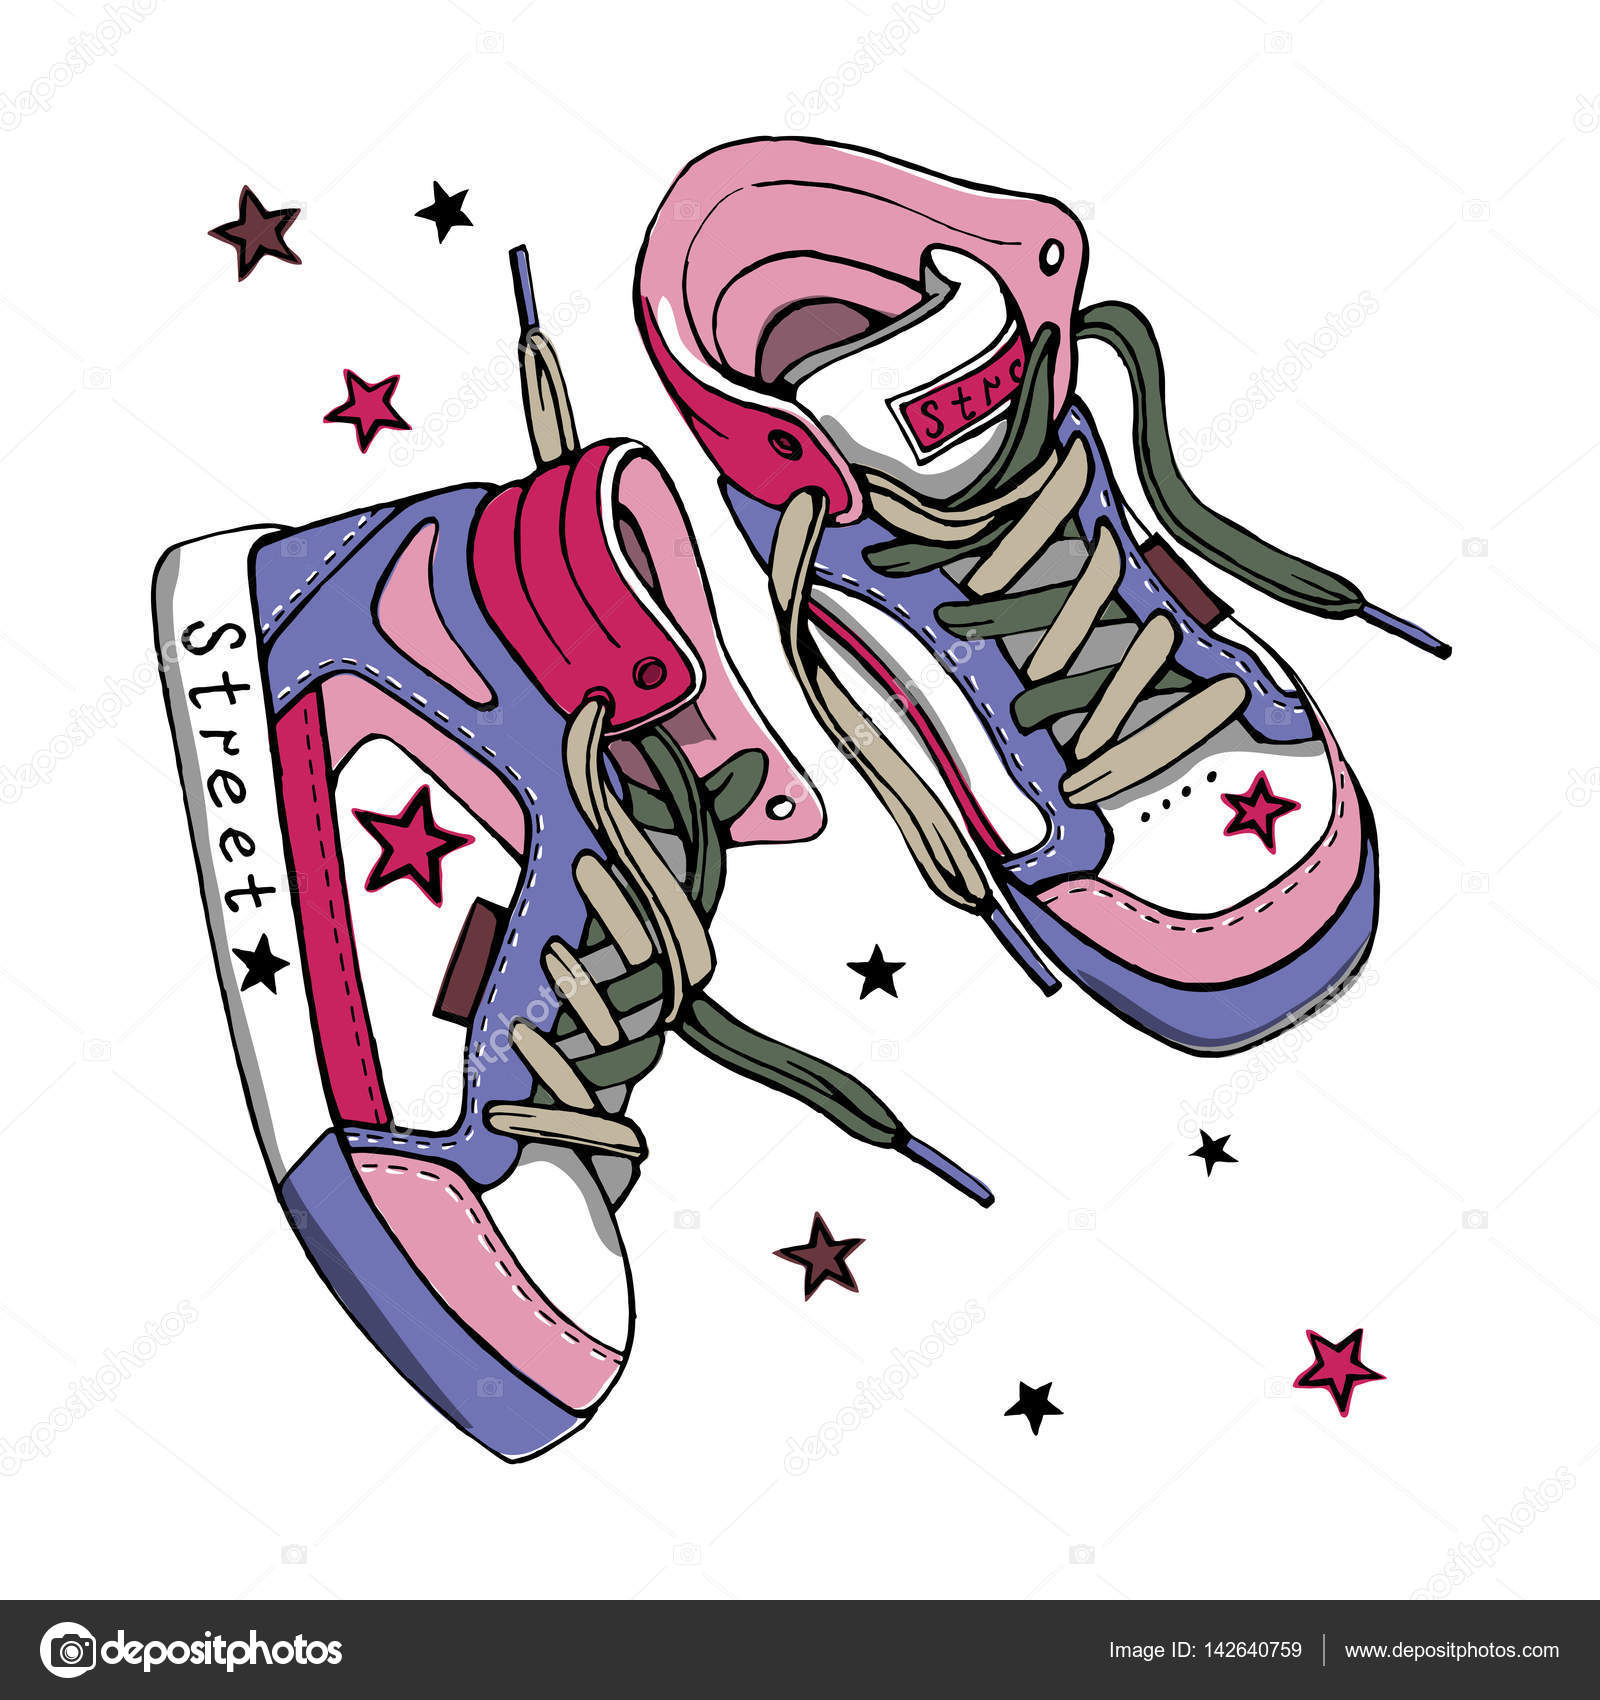 Cartoon Shoes Drawing at GetDrawings Free download